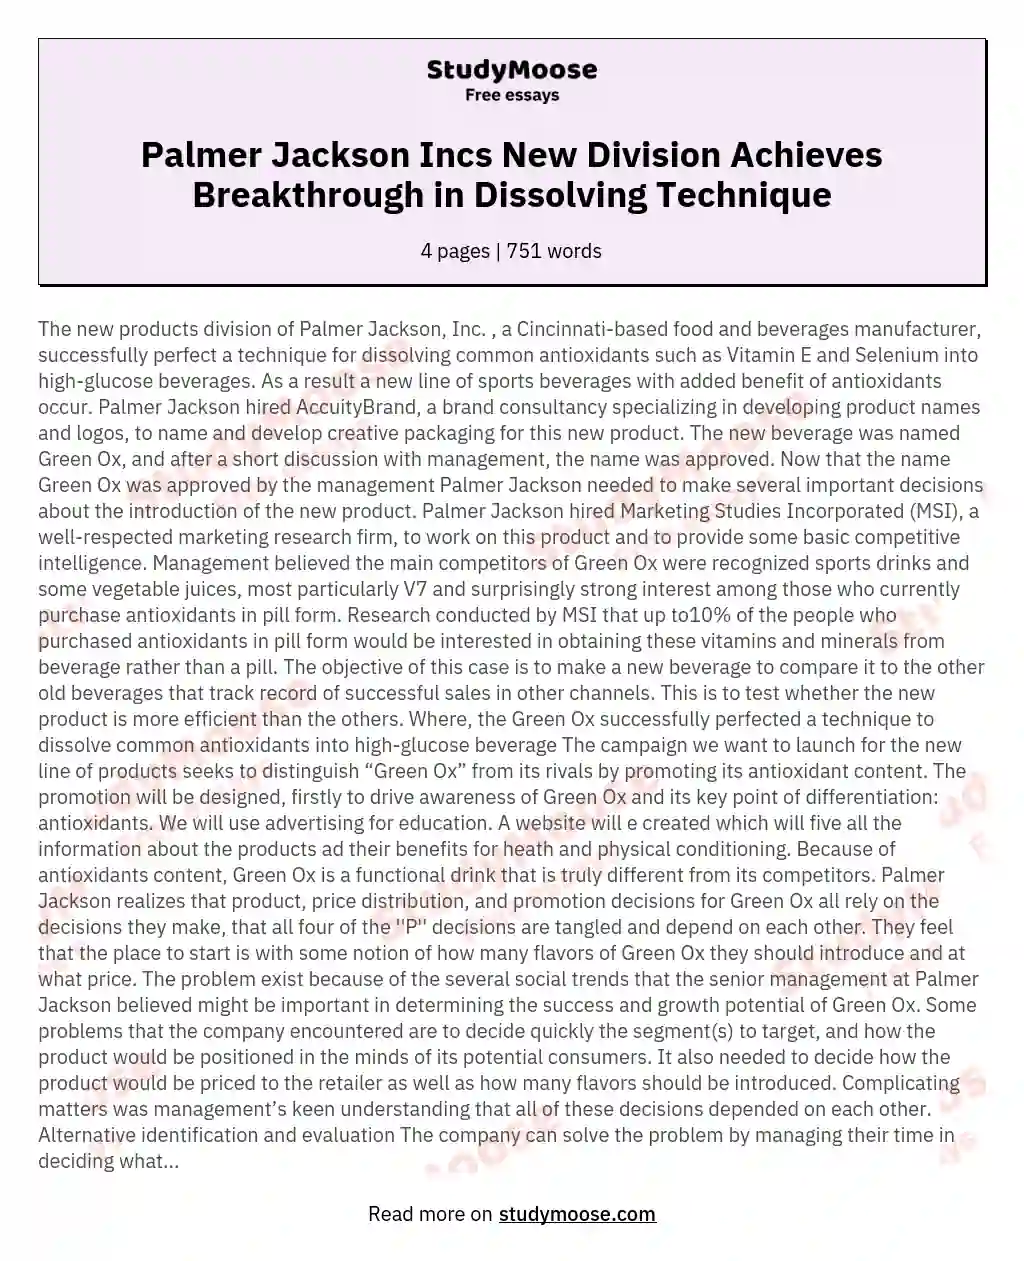 Palmer Jackson Incs New Division Achieves Breakthrough in Dissolving Technique essay